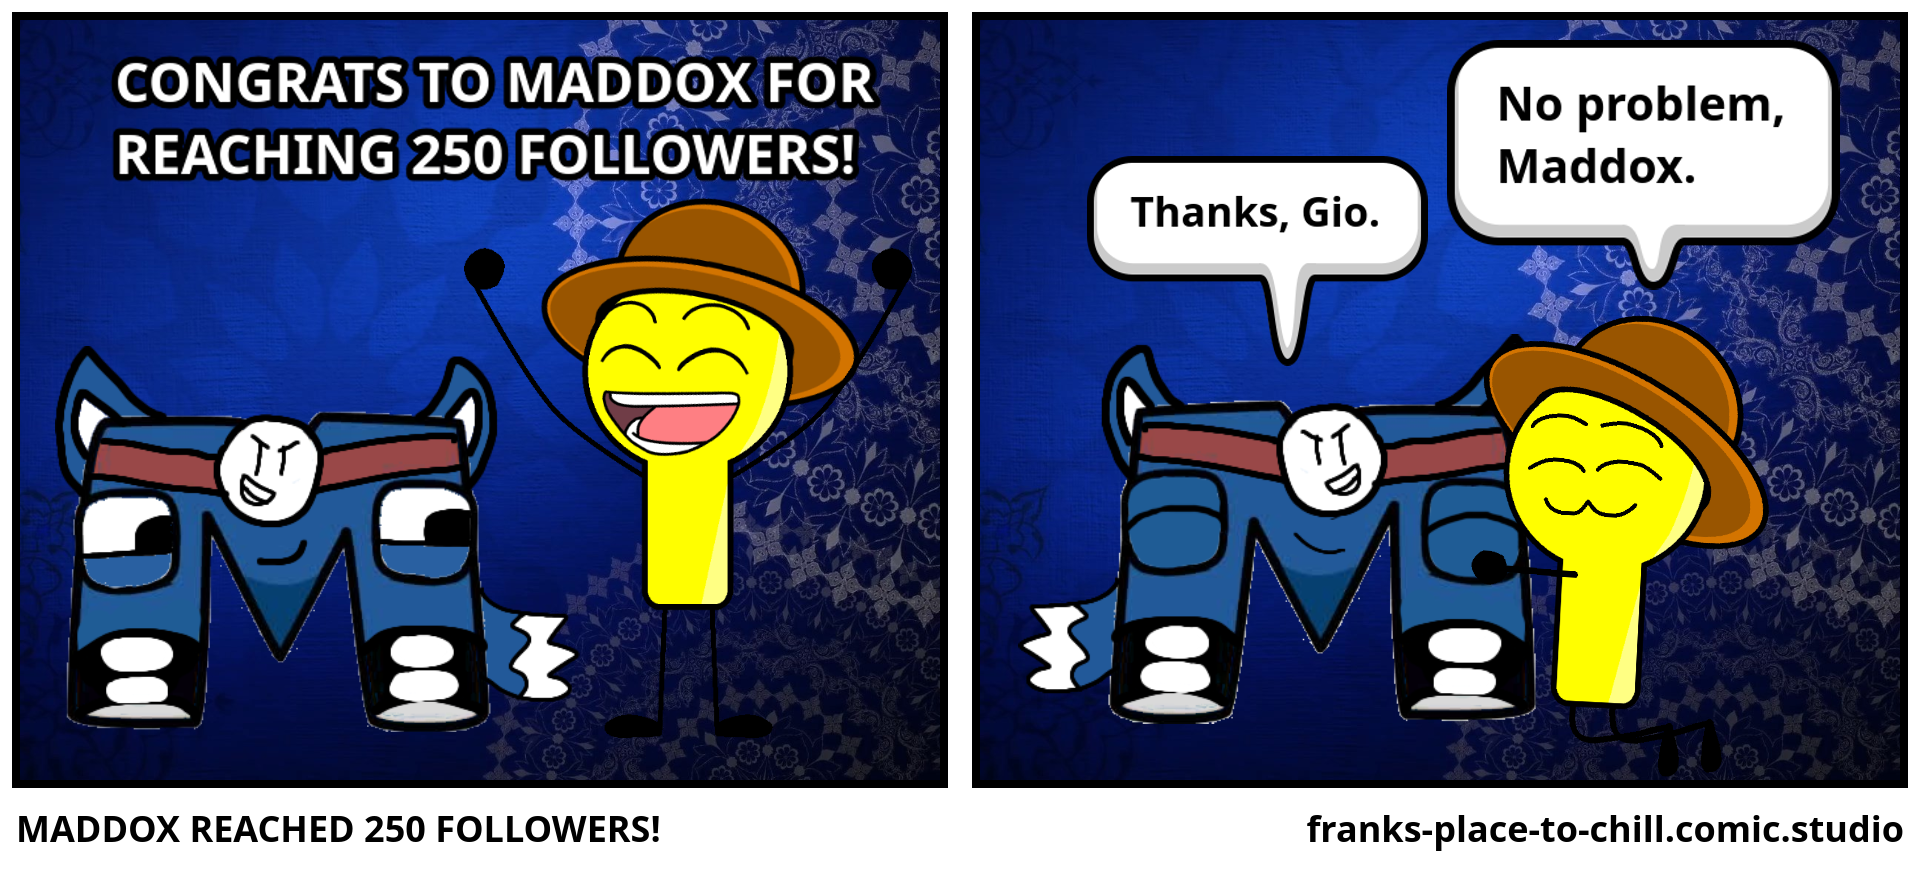 MADDOX REACHED 250 FOLLOWERS!